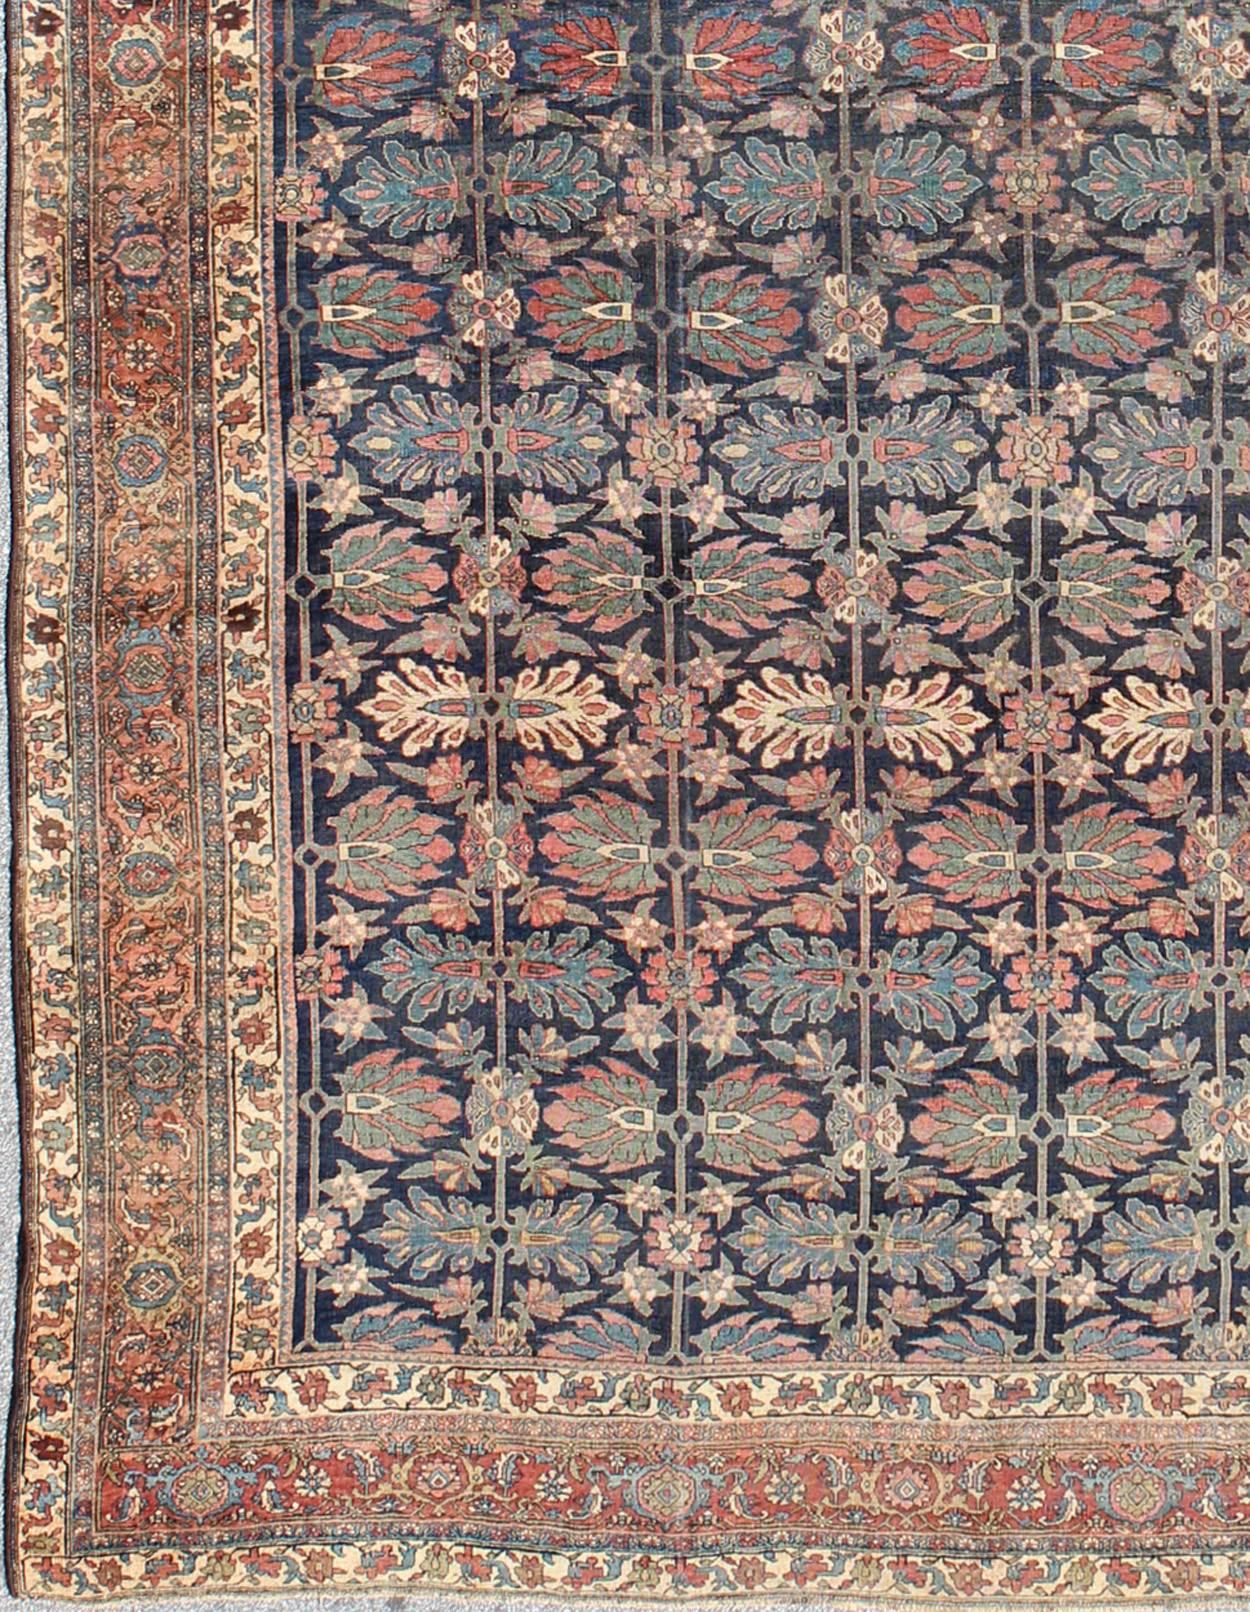 Large antique Persian Bidjar rug in blue background and alternating floral pattern, rug / TRA-8051. Large Antique Bidjar
Distinguished primarily by their dense, durable weaves, Bidjar carpets are fantastic representations of the skill, artistry and